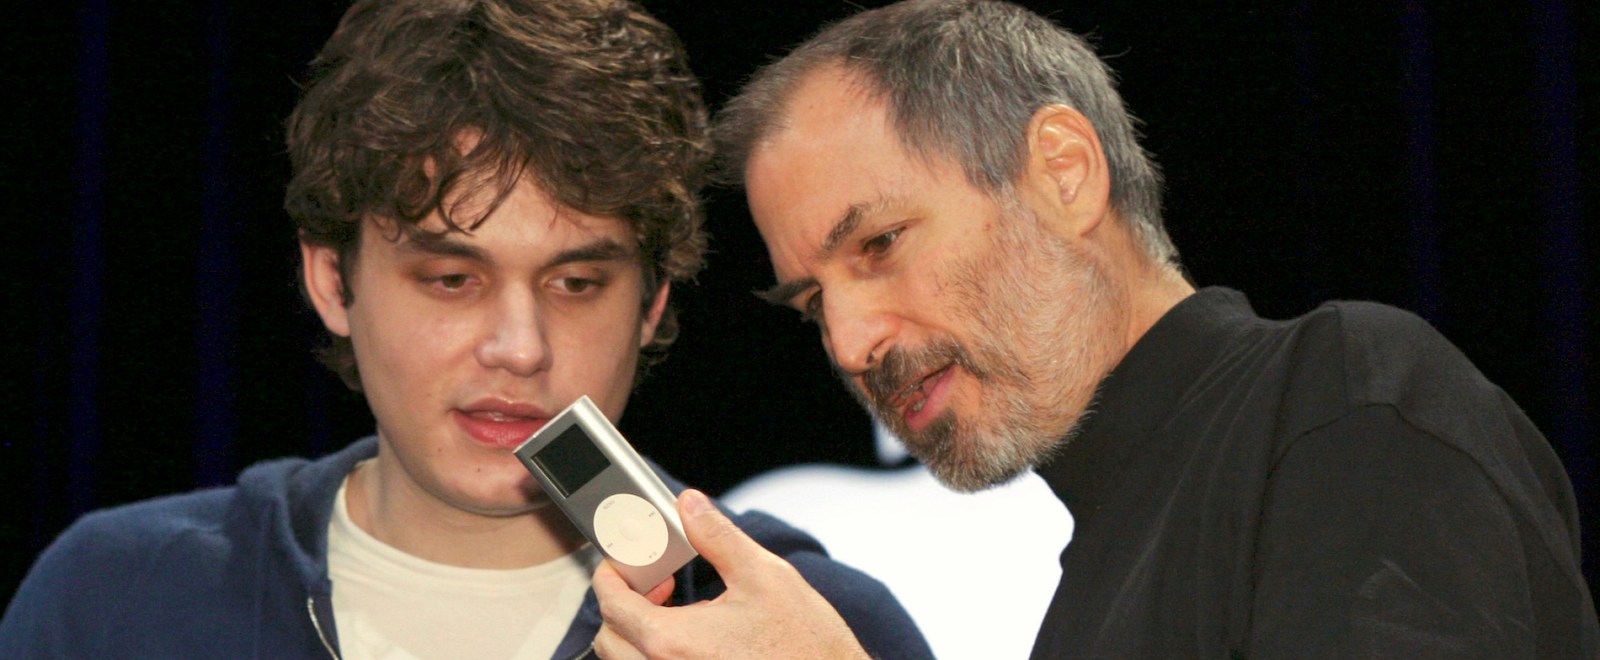 John Mayer Steve Jobs iPod Mini Macworld 2004